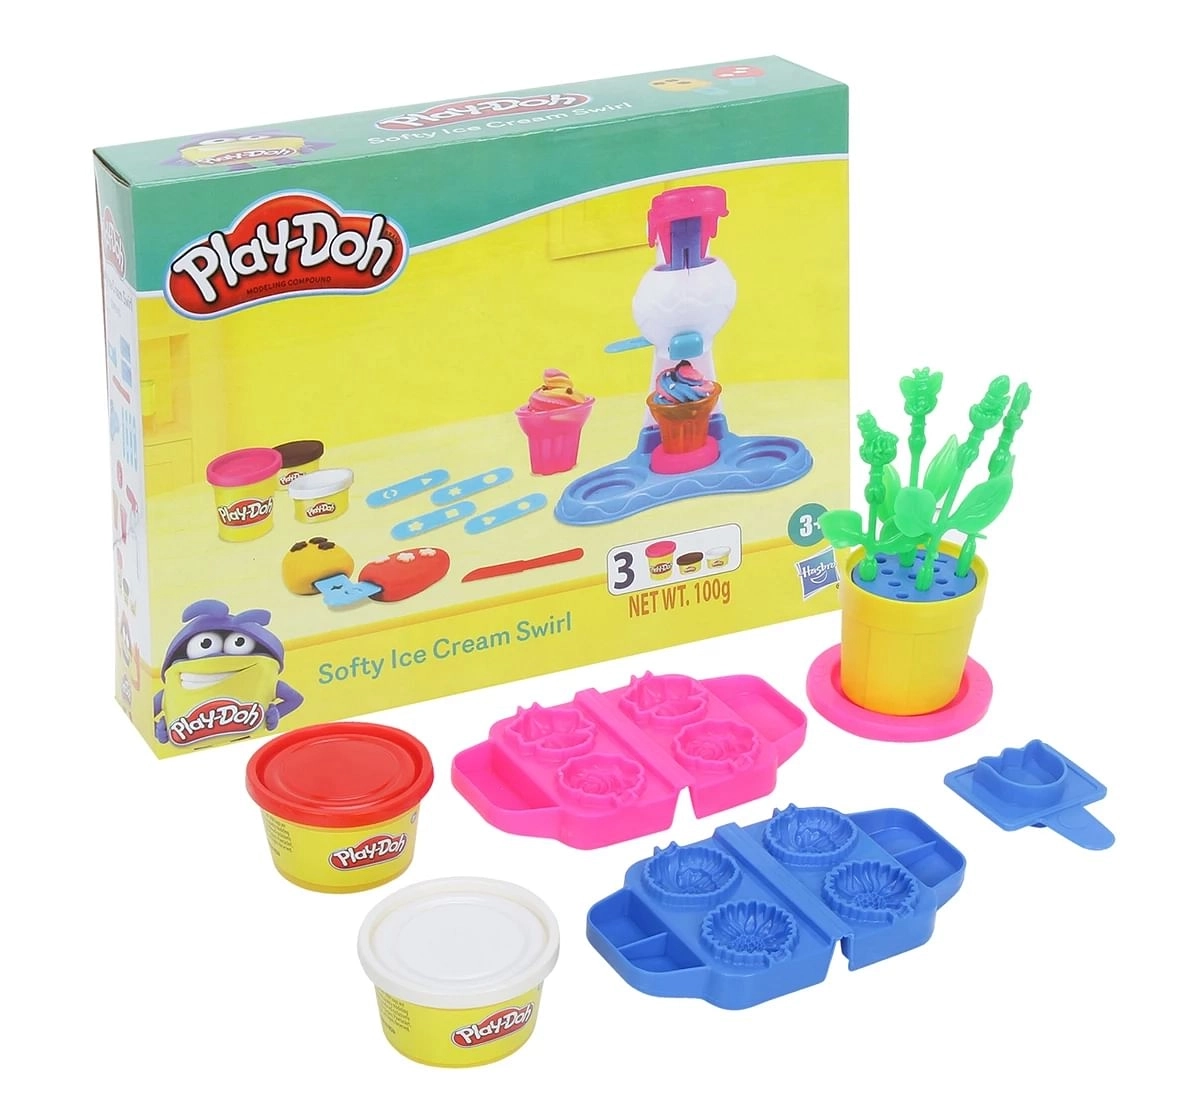 Play Doh Rose Garden Playset for Kids 3Y+, Multicoloyr